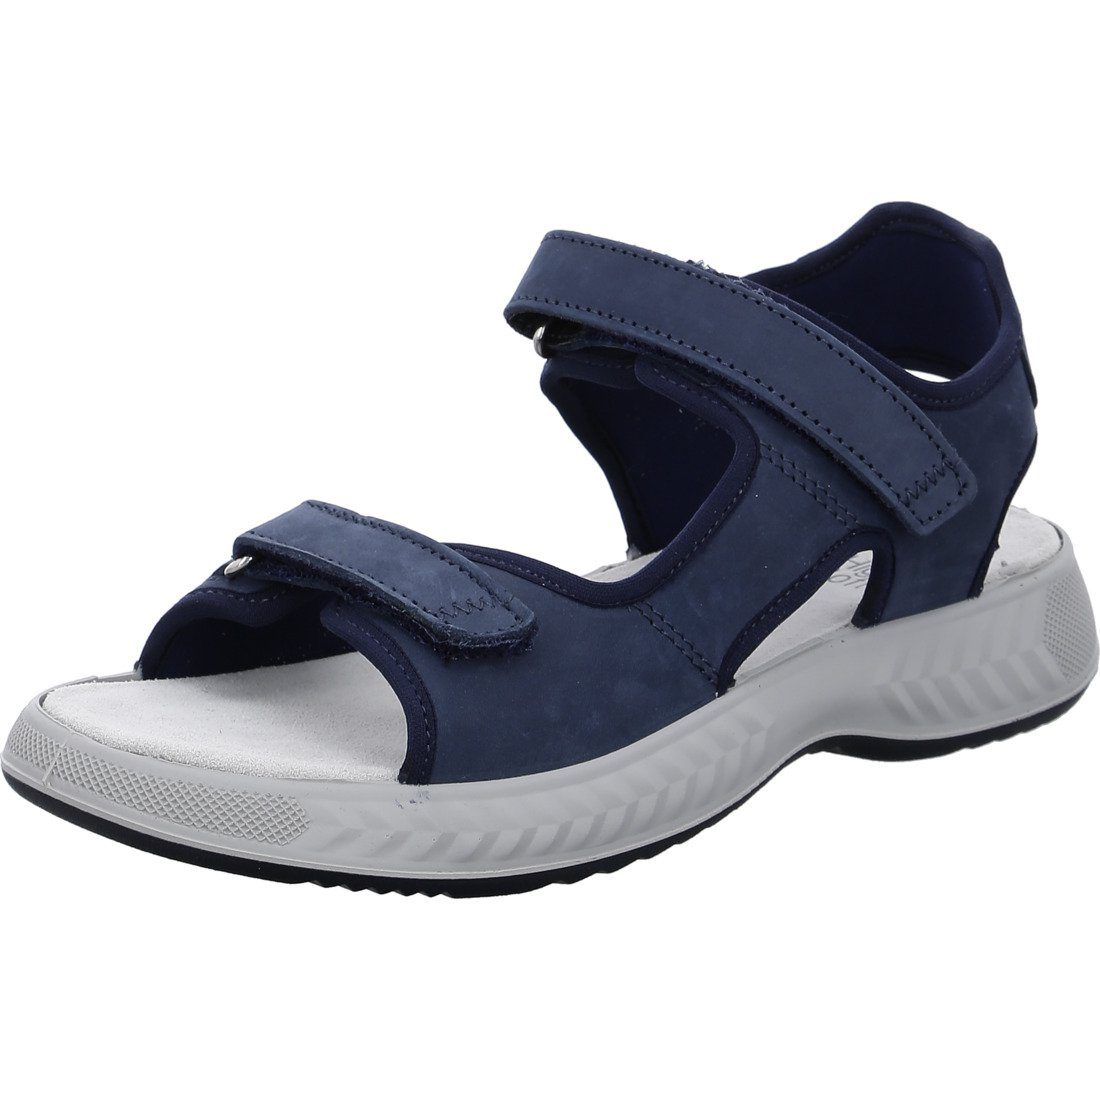 Ara Ara Schuhe, Sandalette Avio - Leder Damen Sandalette blau 047882